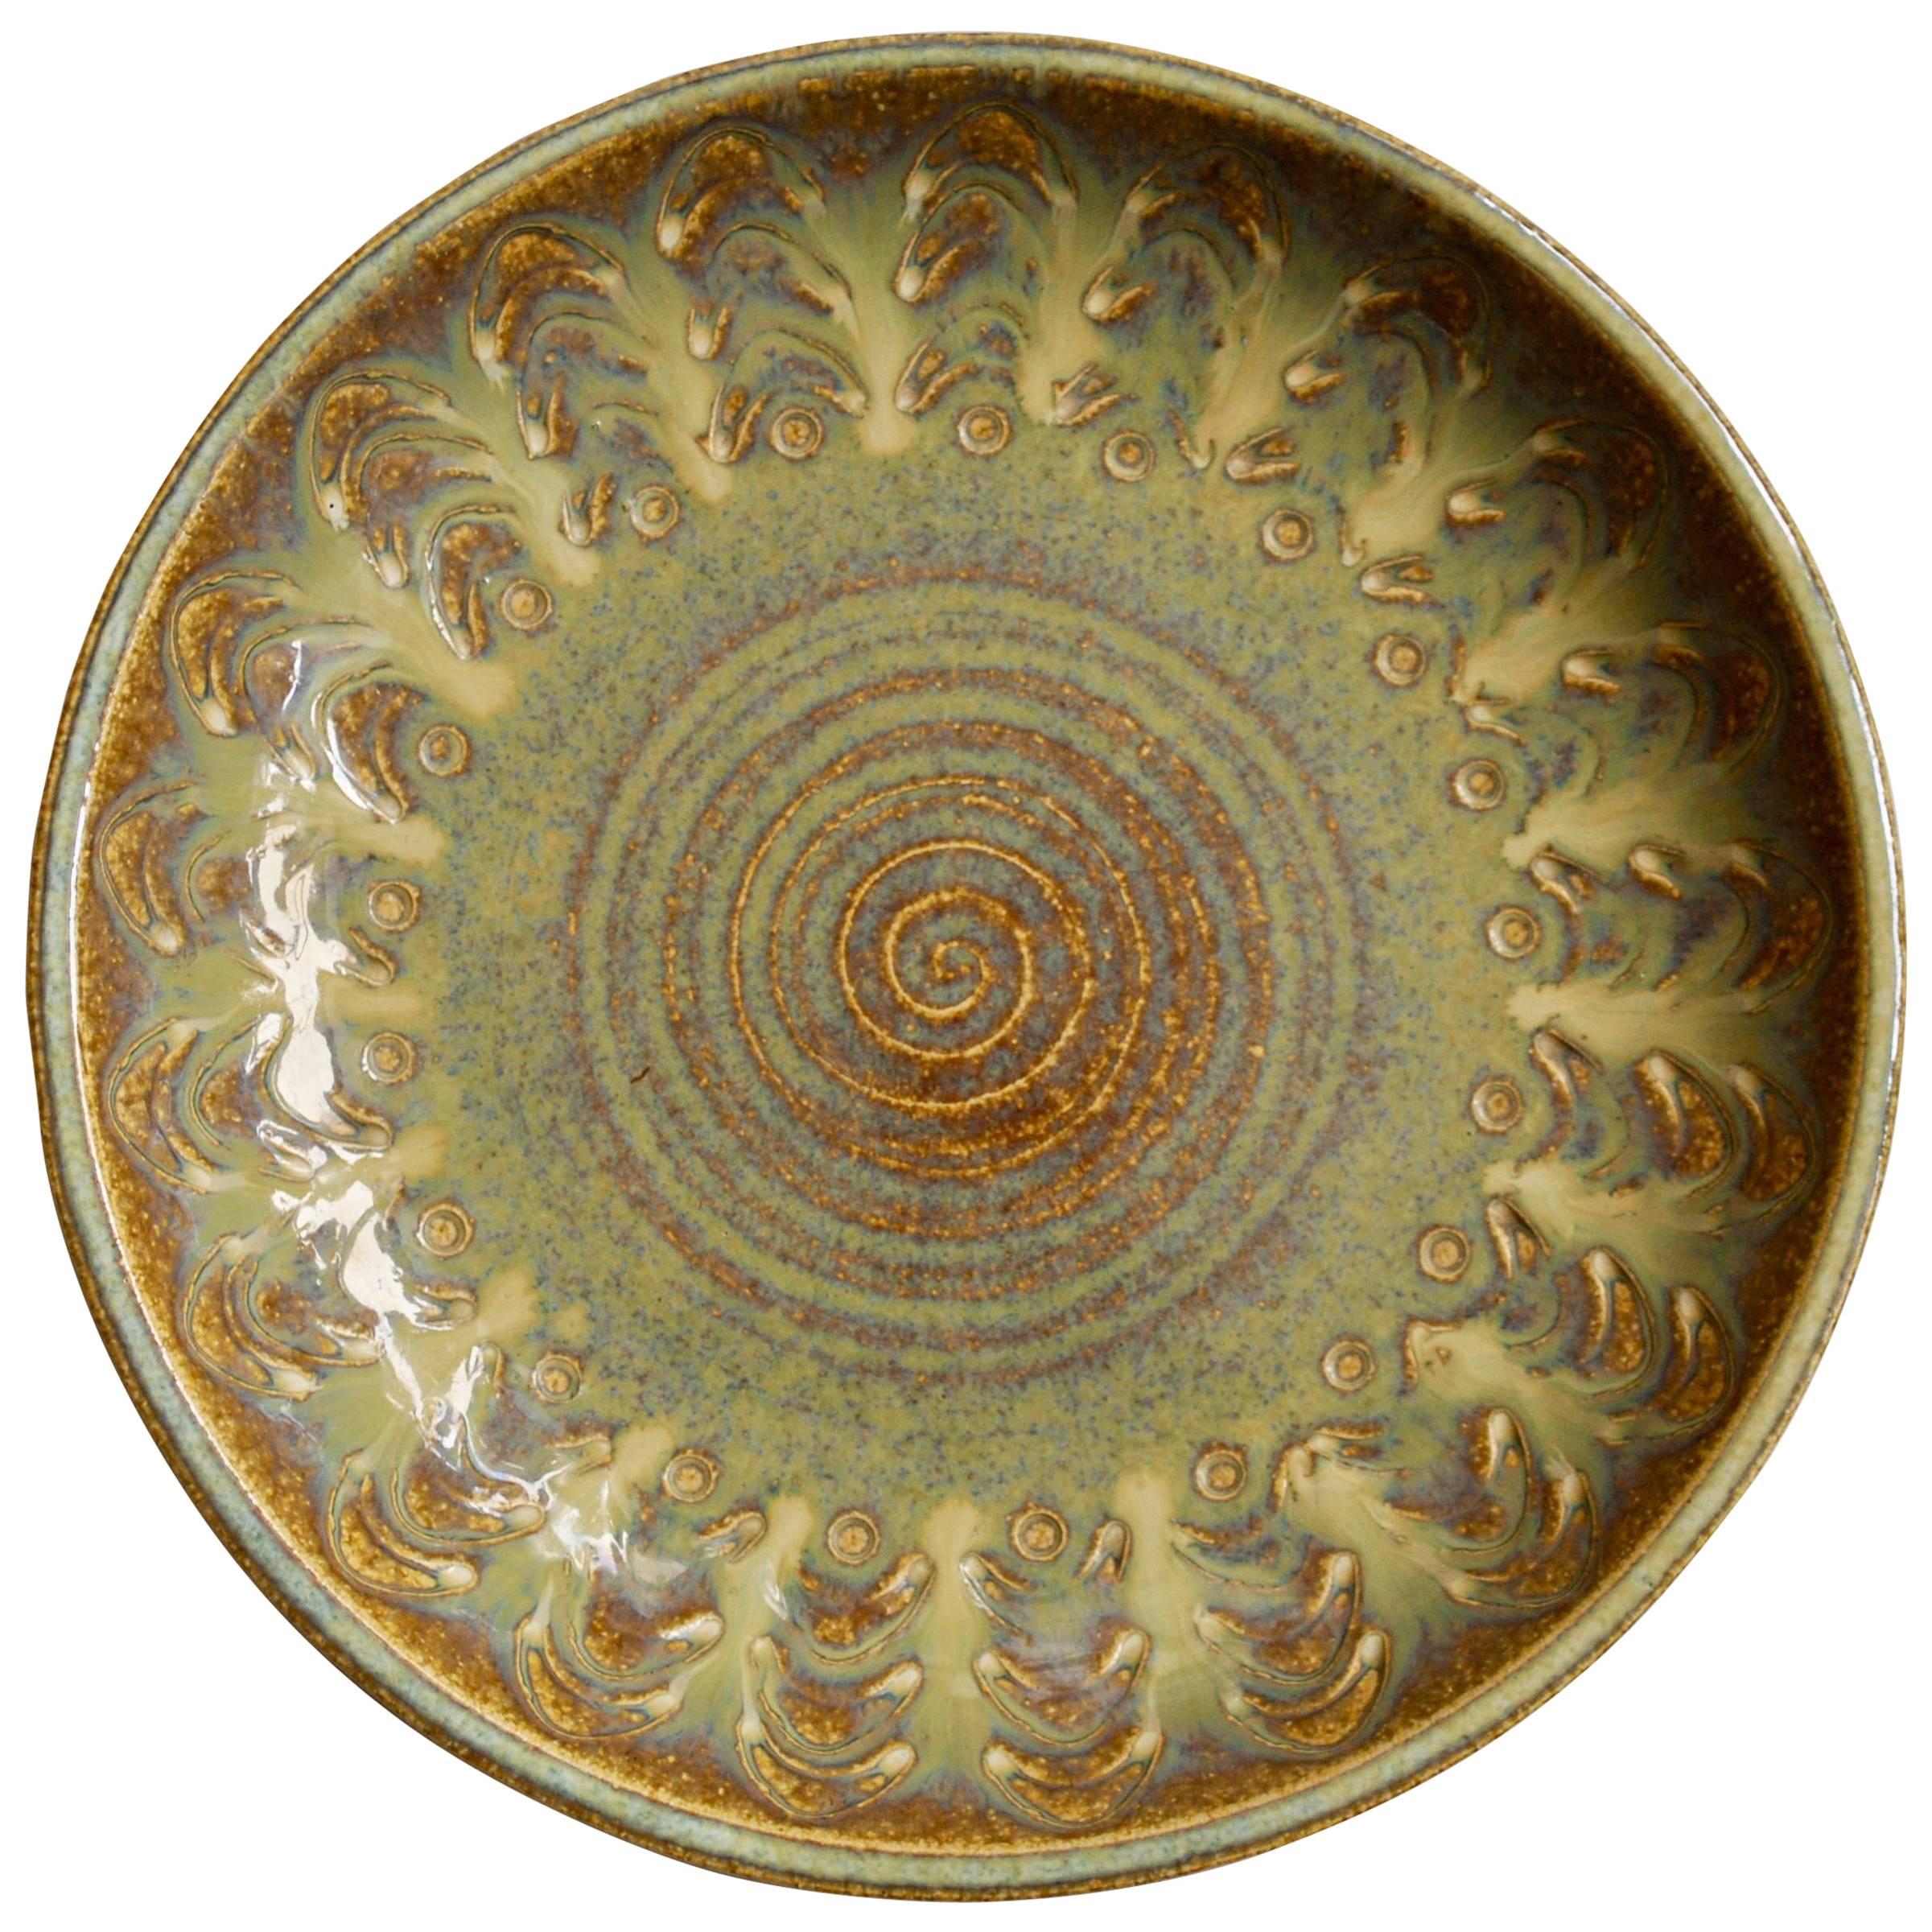 Soholm Ceramic Dish by Einar Johansen 1960s, Bornholm Denmark